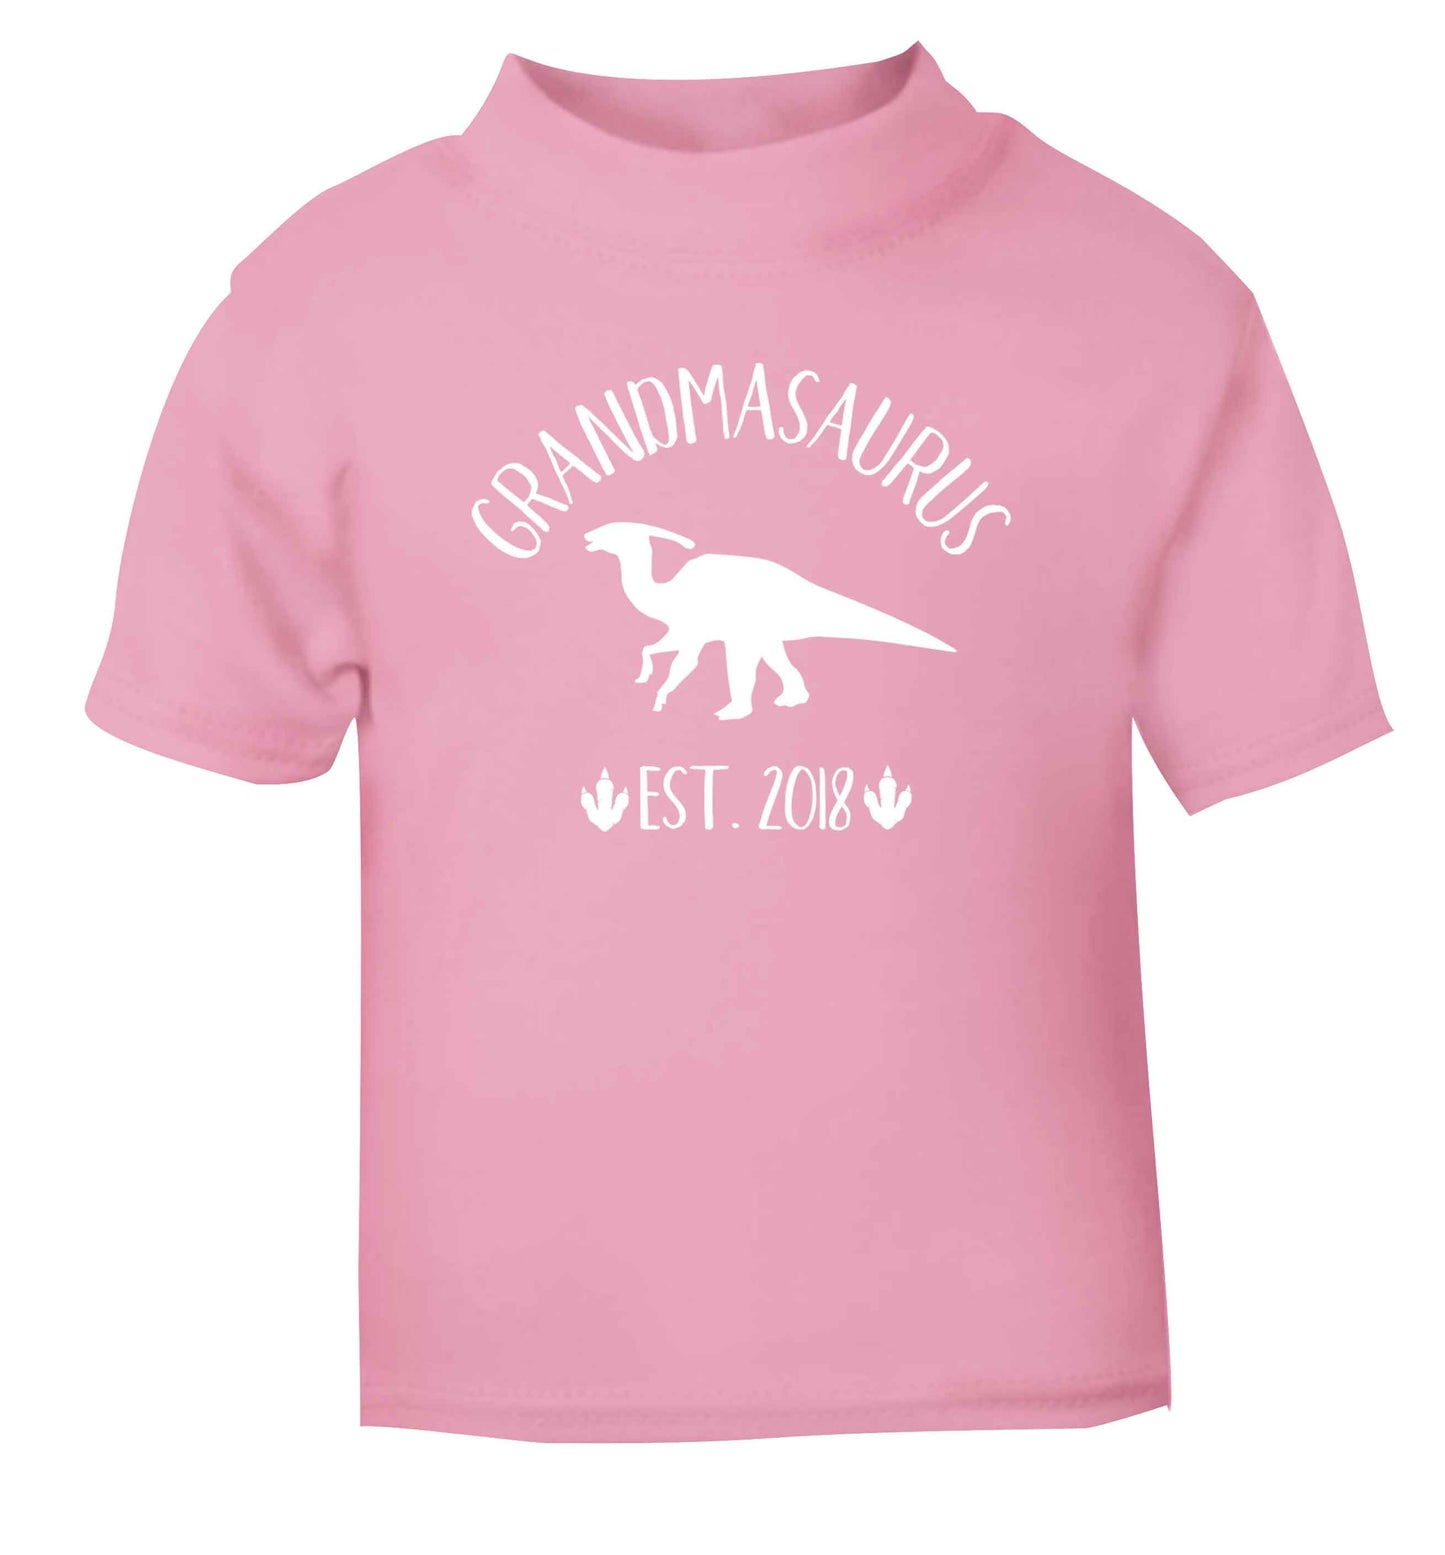 Personalised grandmasaurus since (custom date) light pink Baby Toddler Tshirt 2 Years